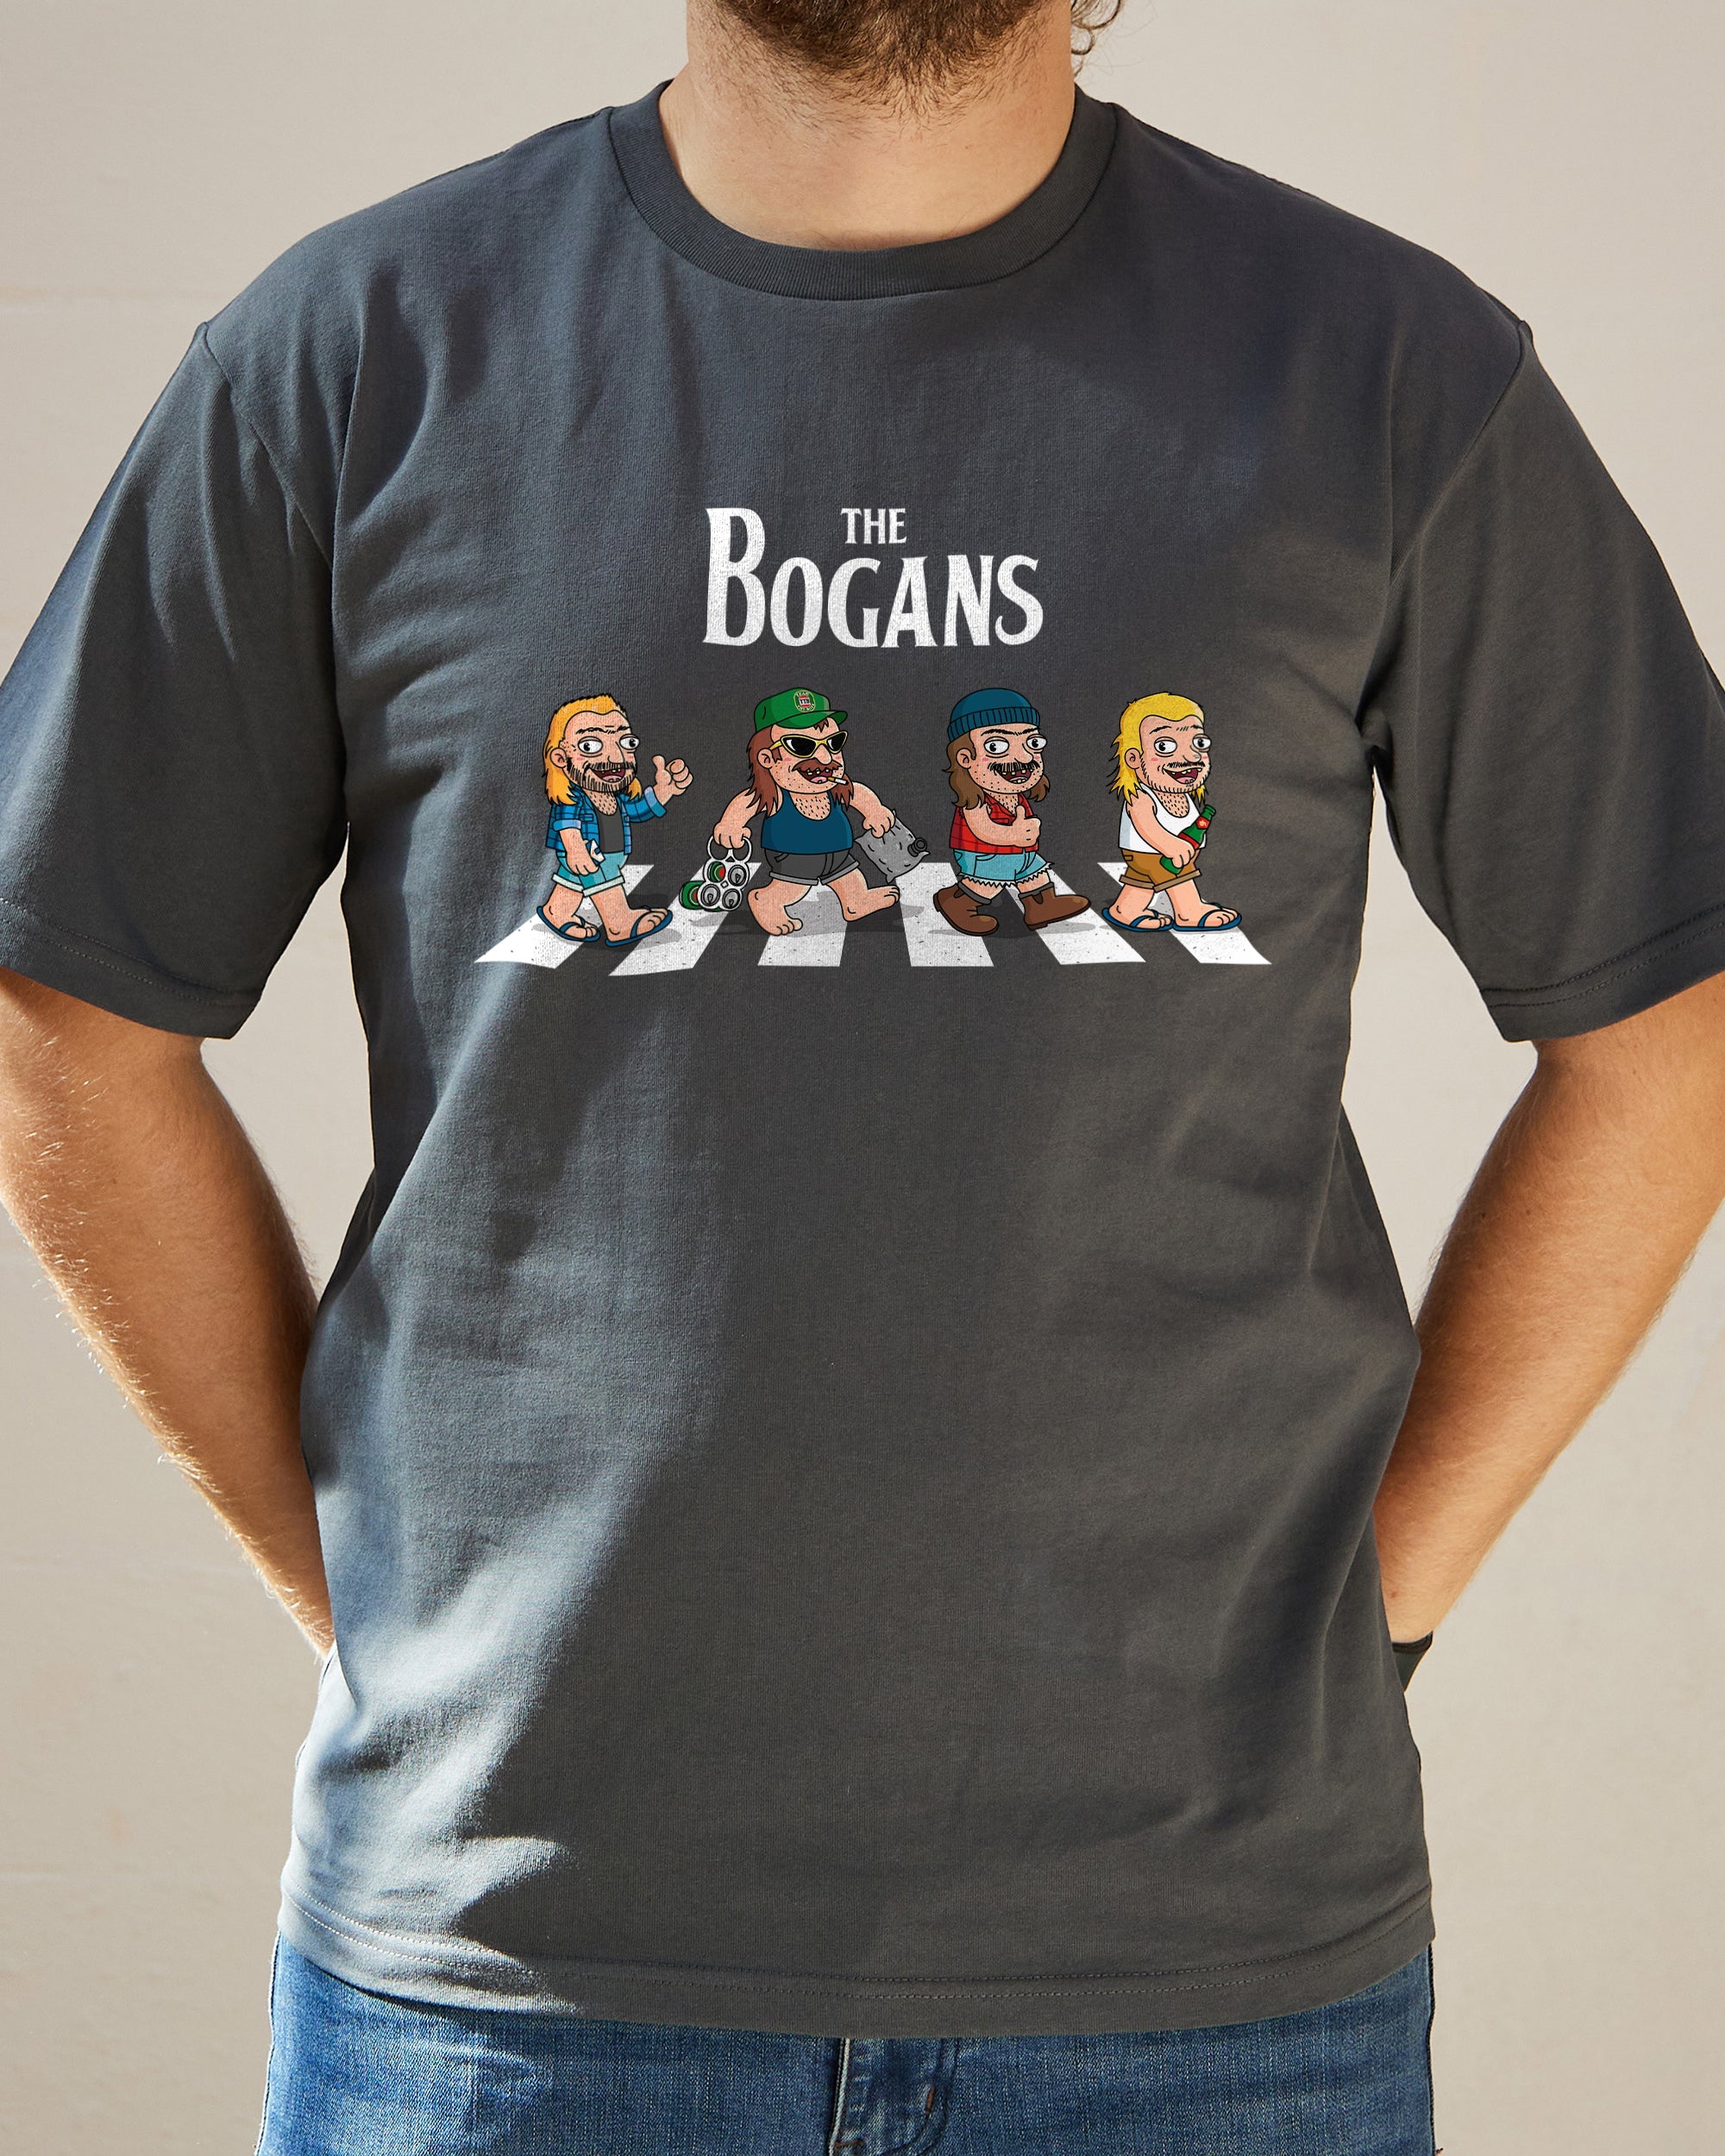 Bogan Abbey Road T-Shirt Australia Online Coal